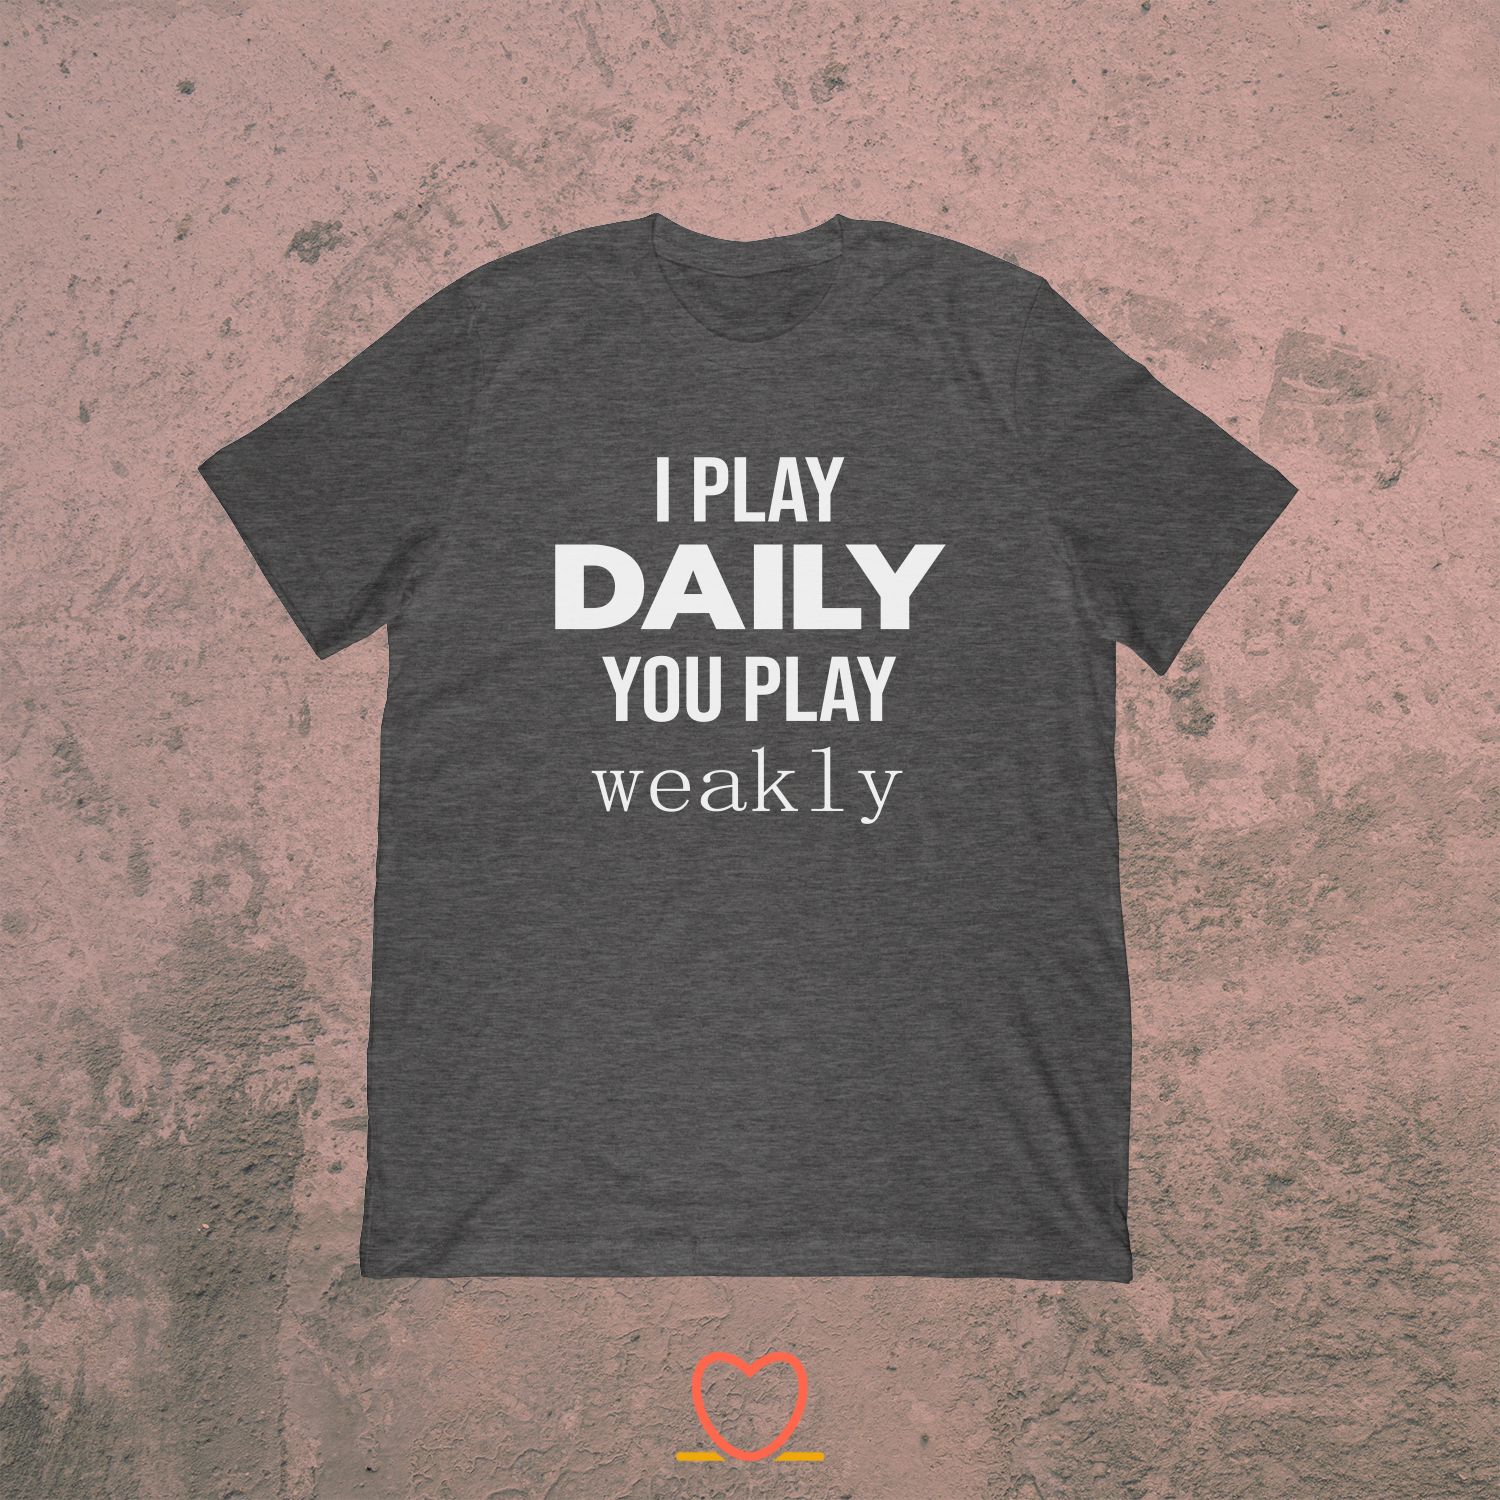 I Play Daily You Play Weakly – Funny Ice Hockey Tee